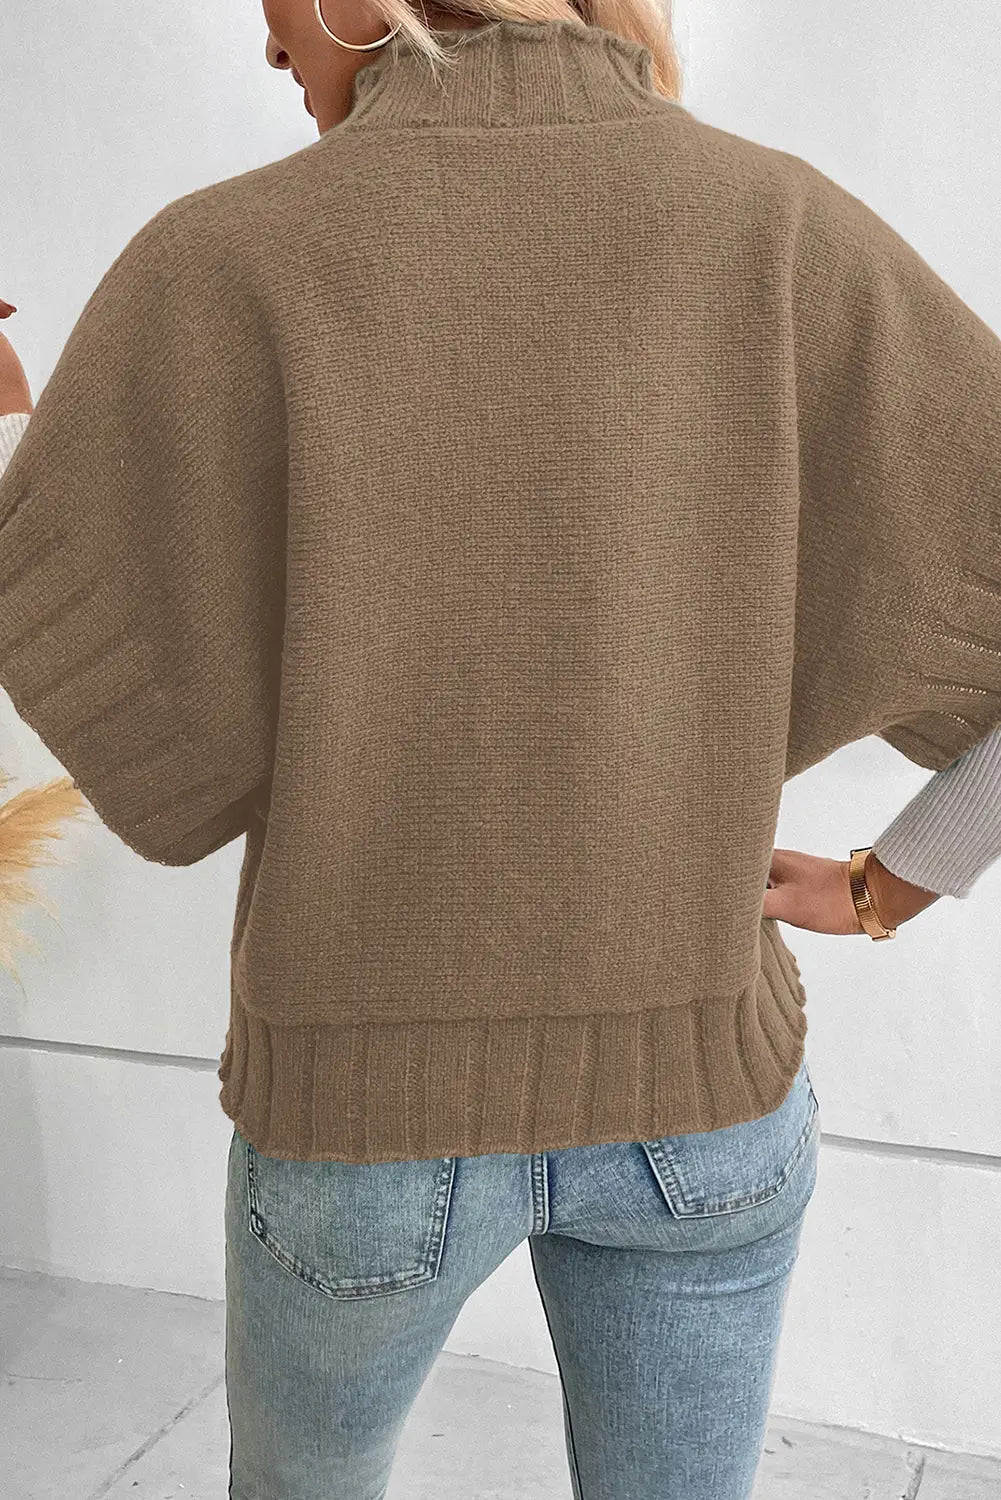 Desert palm mock neck batwing short sleeve knit sweater - sweaters & cardigans